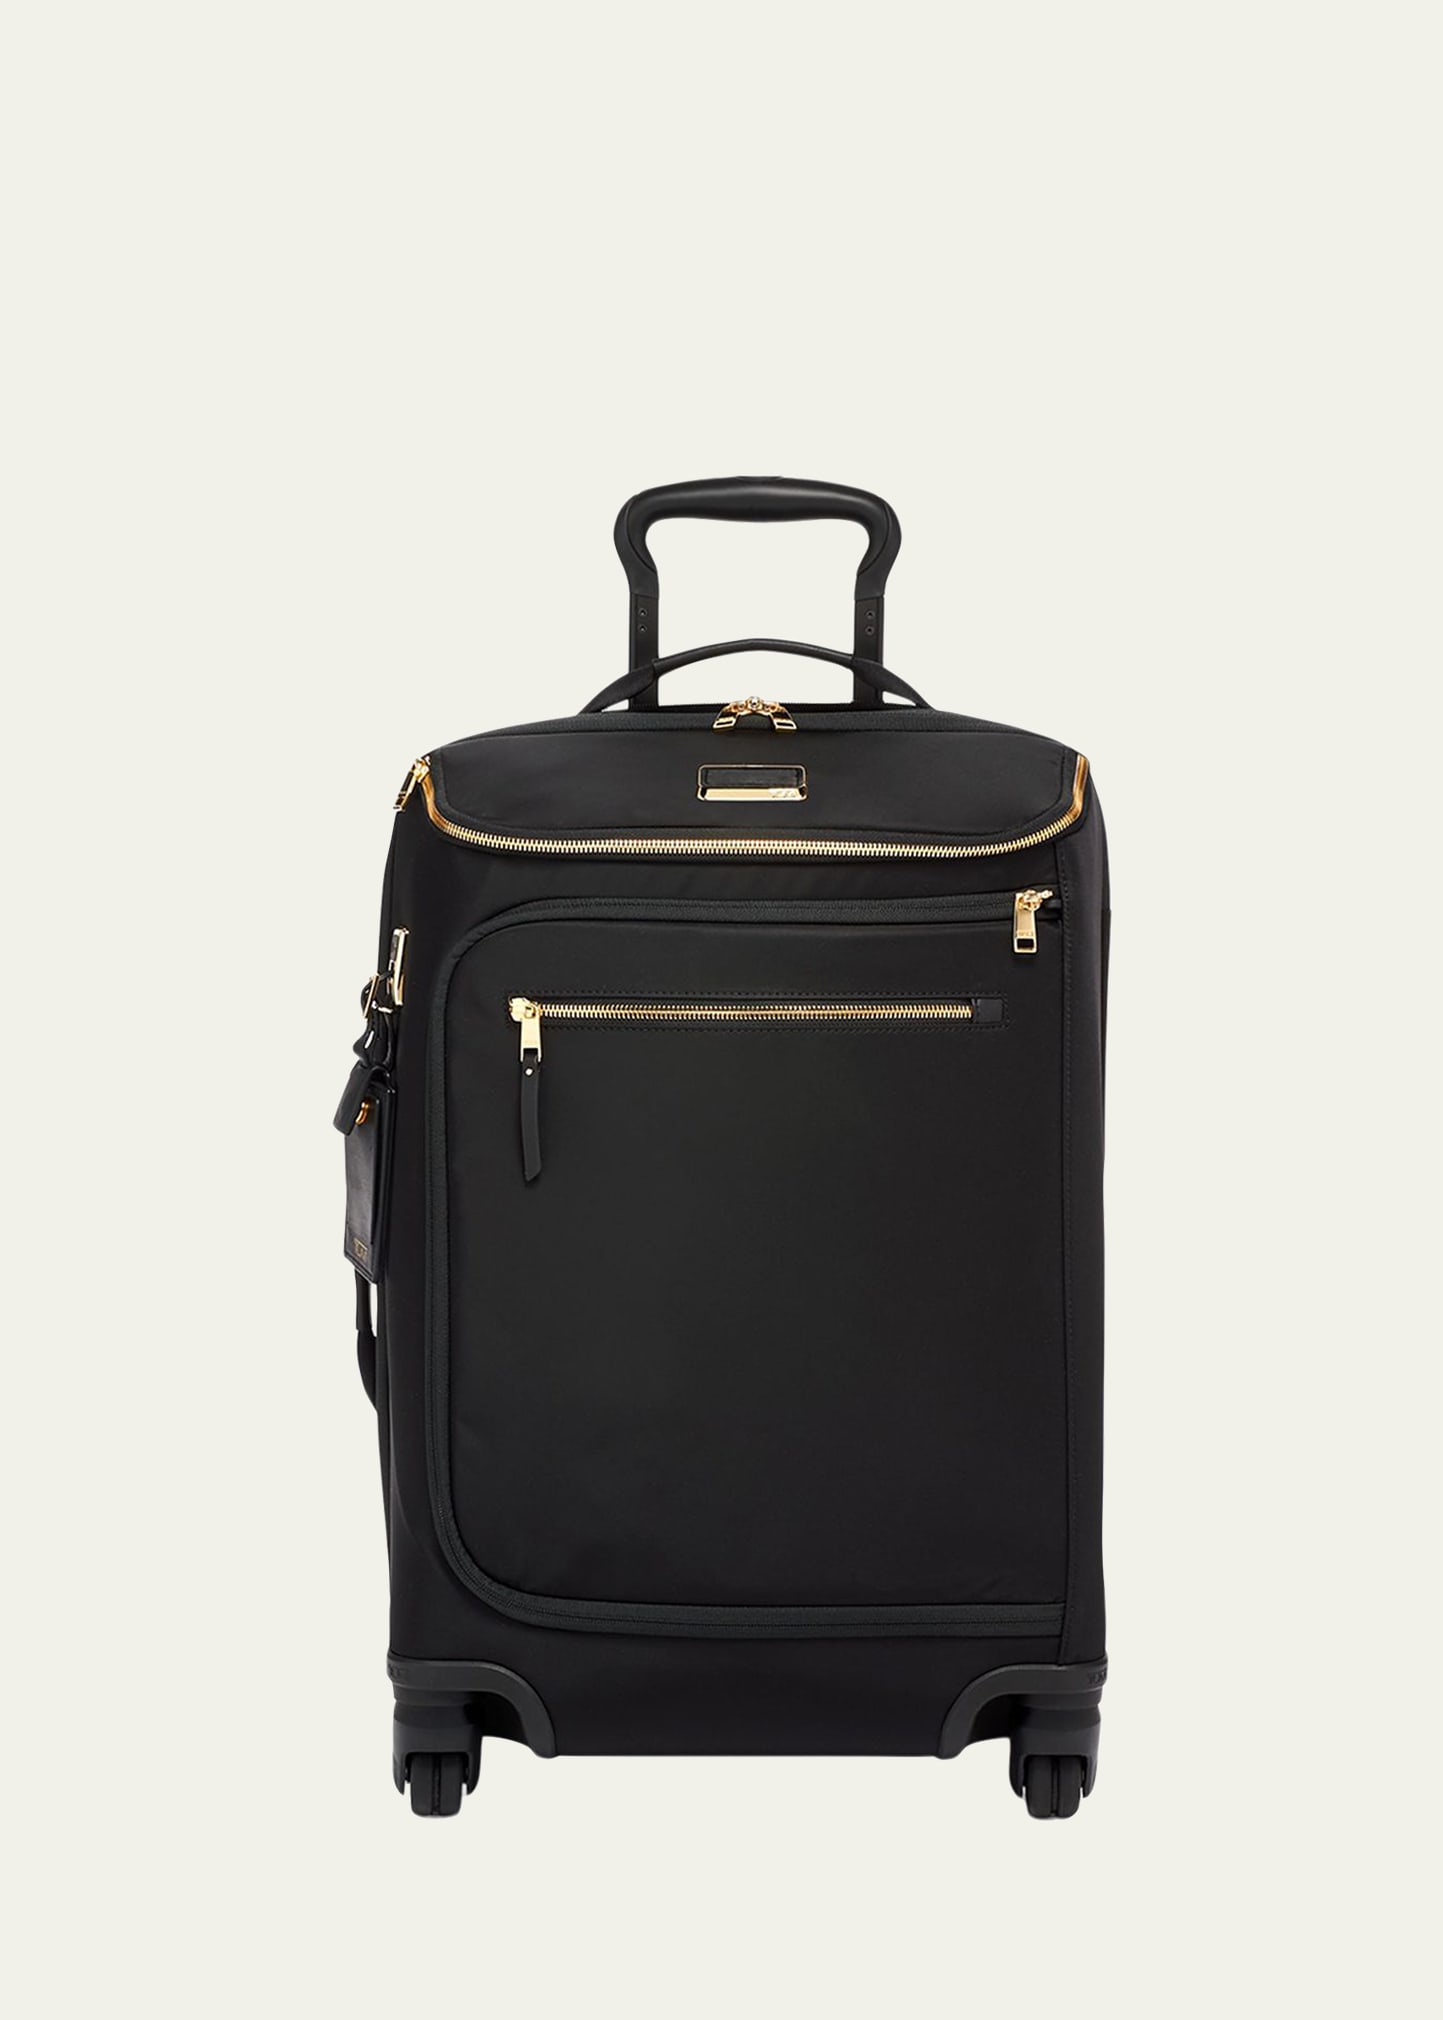 Leger International Carry-On Luggage, Black